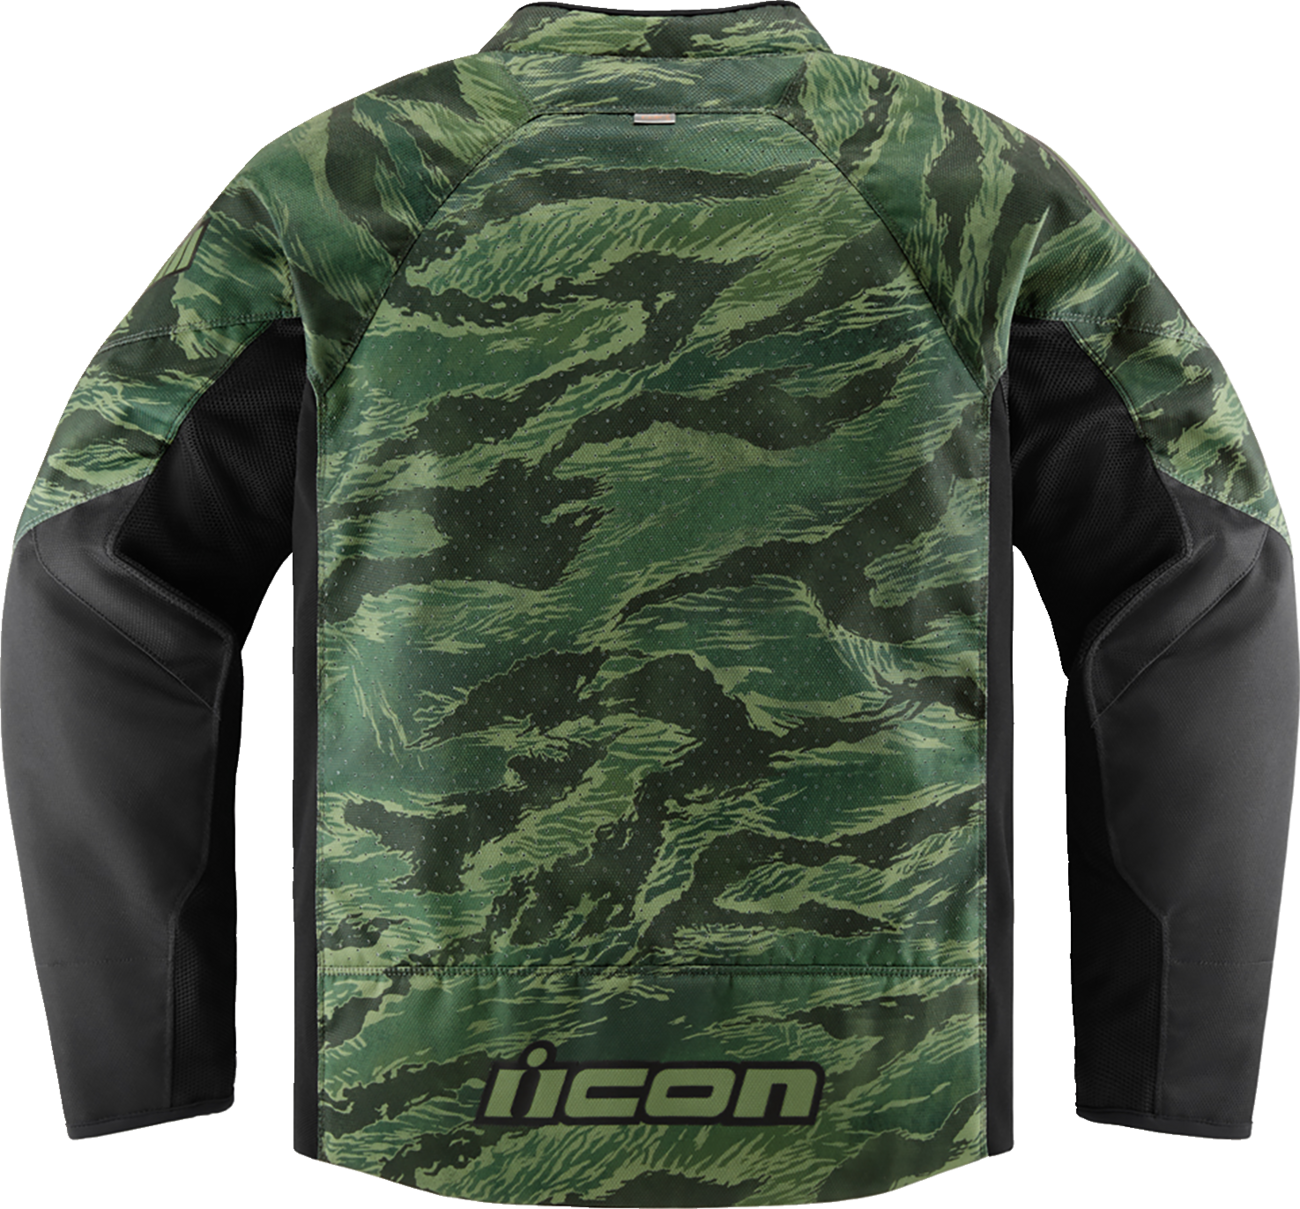 ICON Hooligan CE Tiger's Blood Jacket - Green - Medium 2820-6153